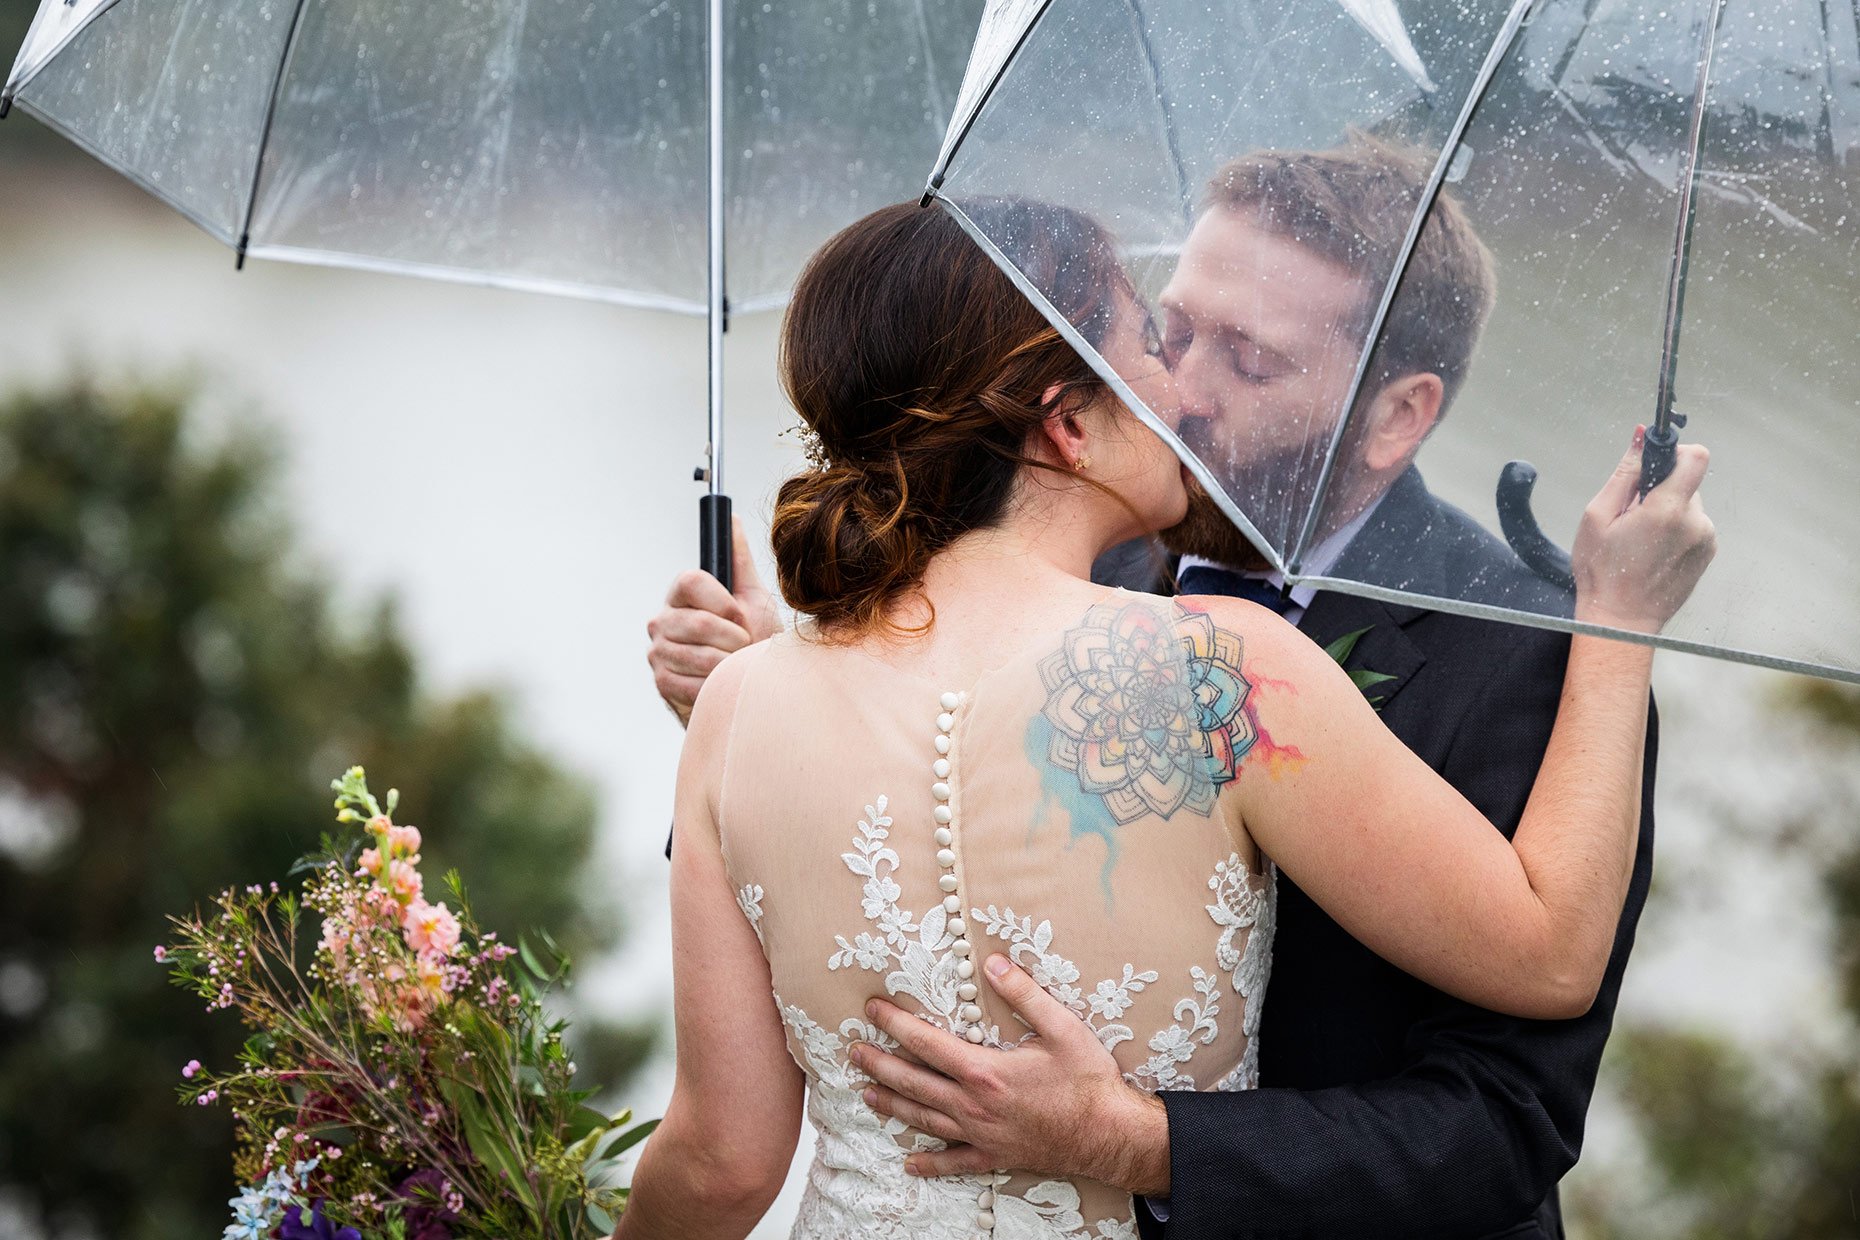 Bride and Groom kissing in the rain under umbrellas